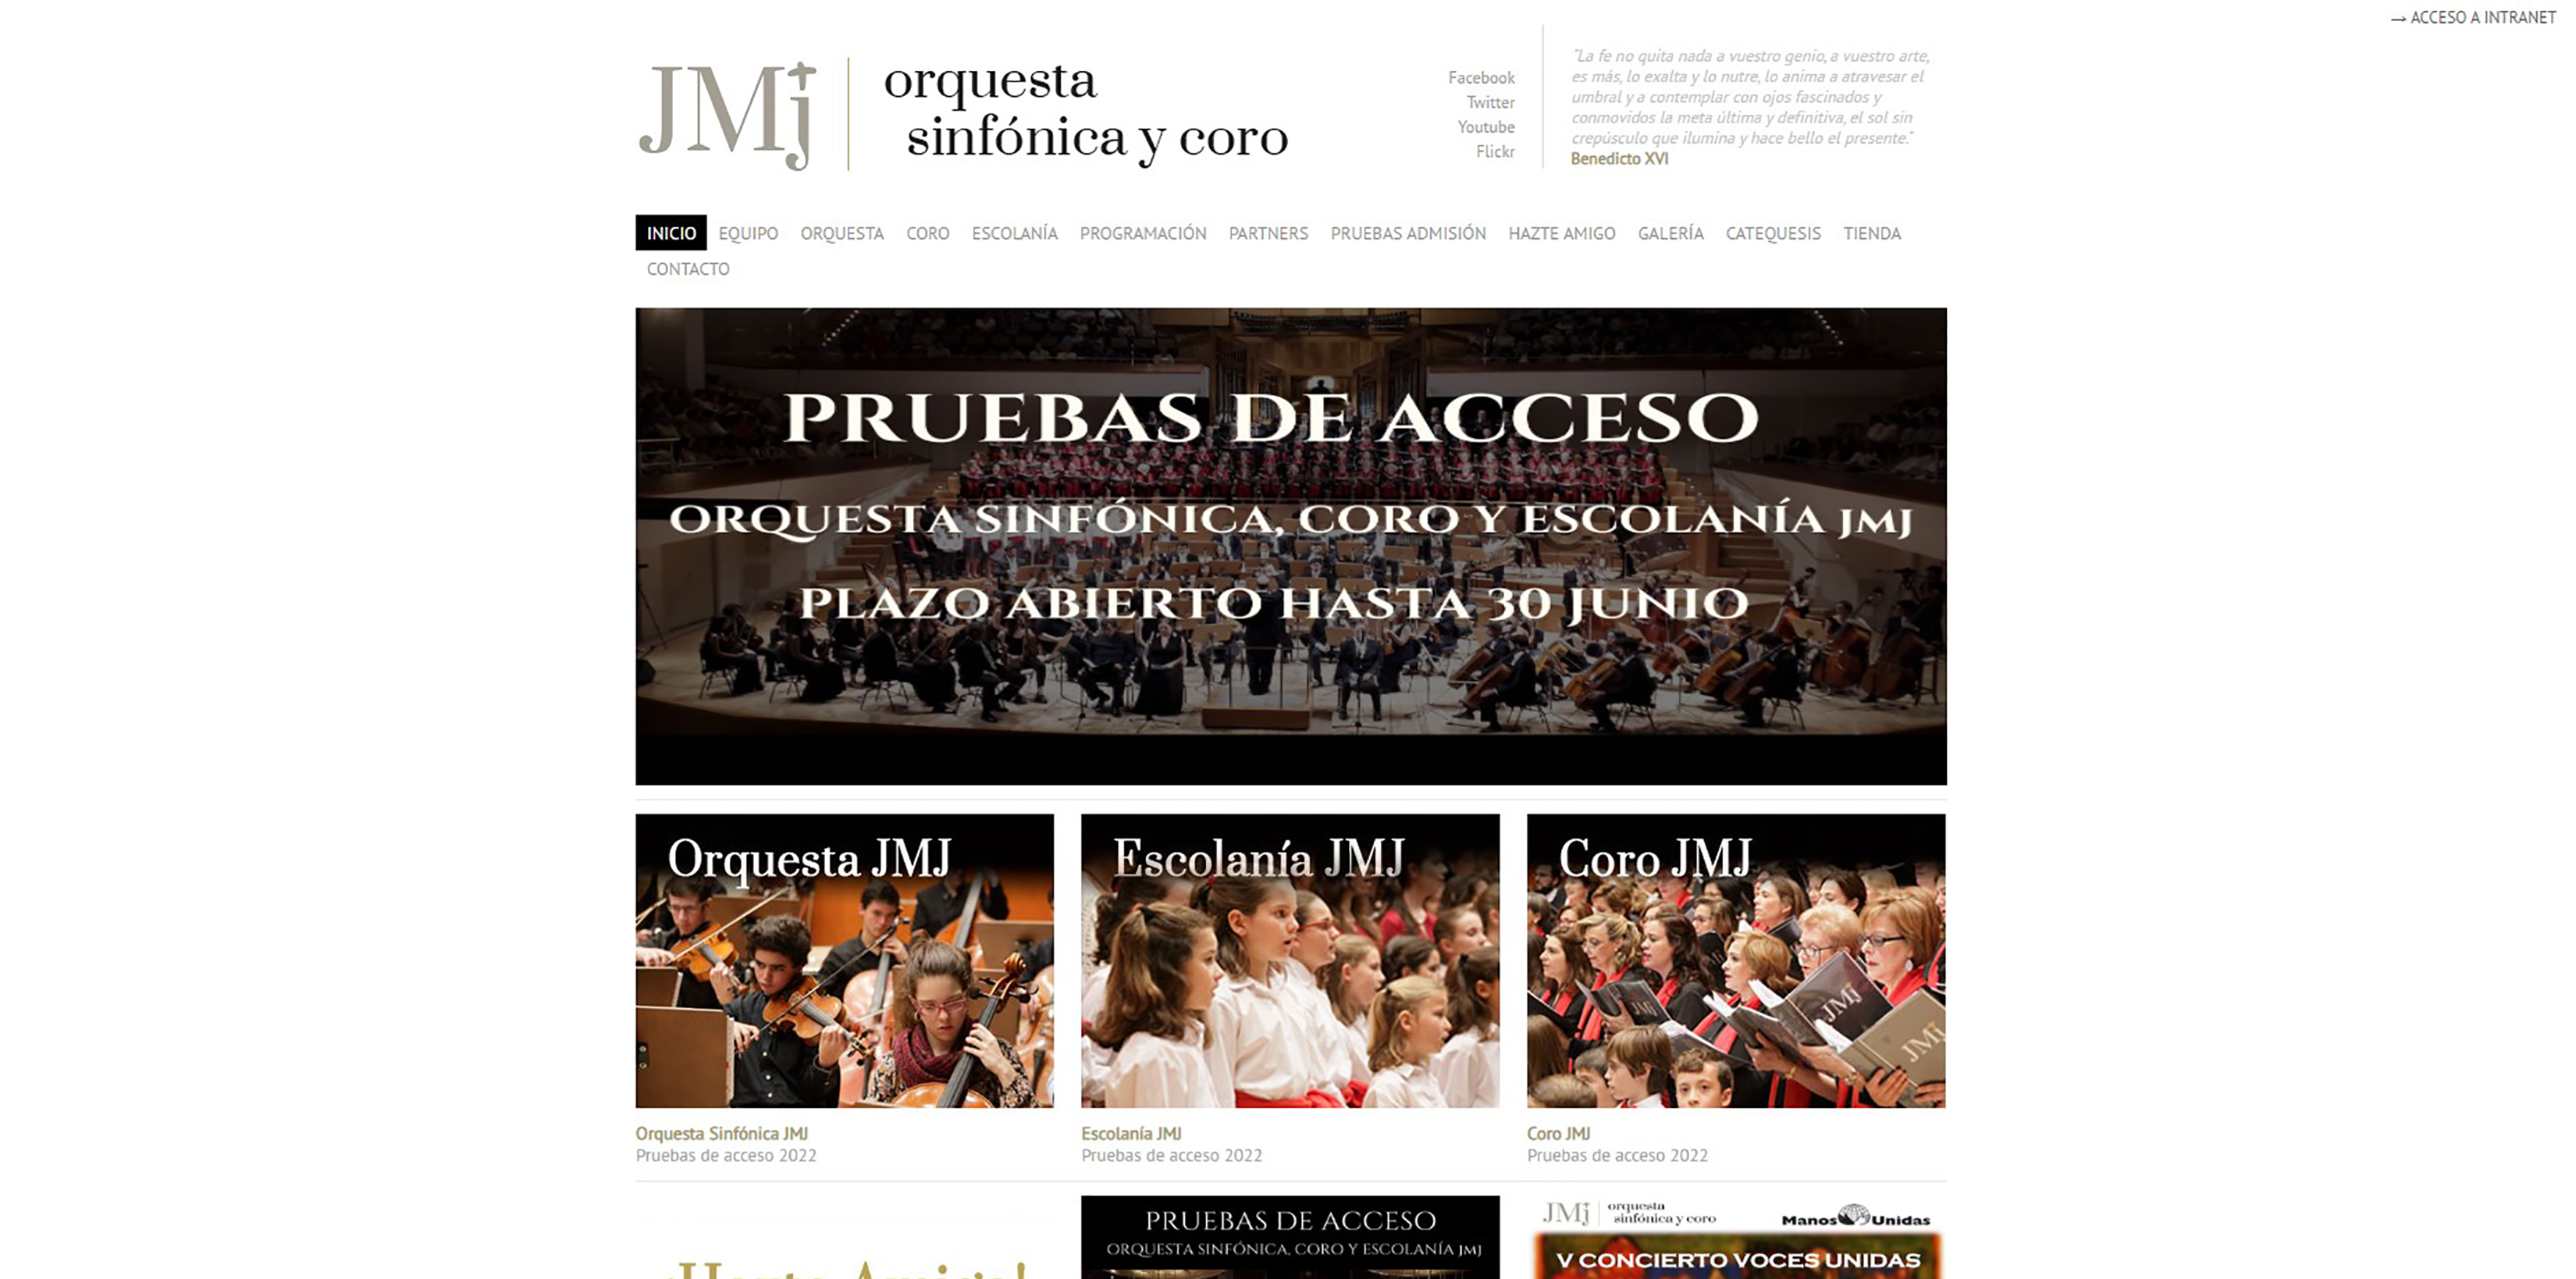 Orquesta sinfónica y Coro JMJ